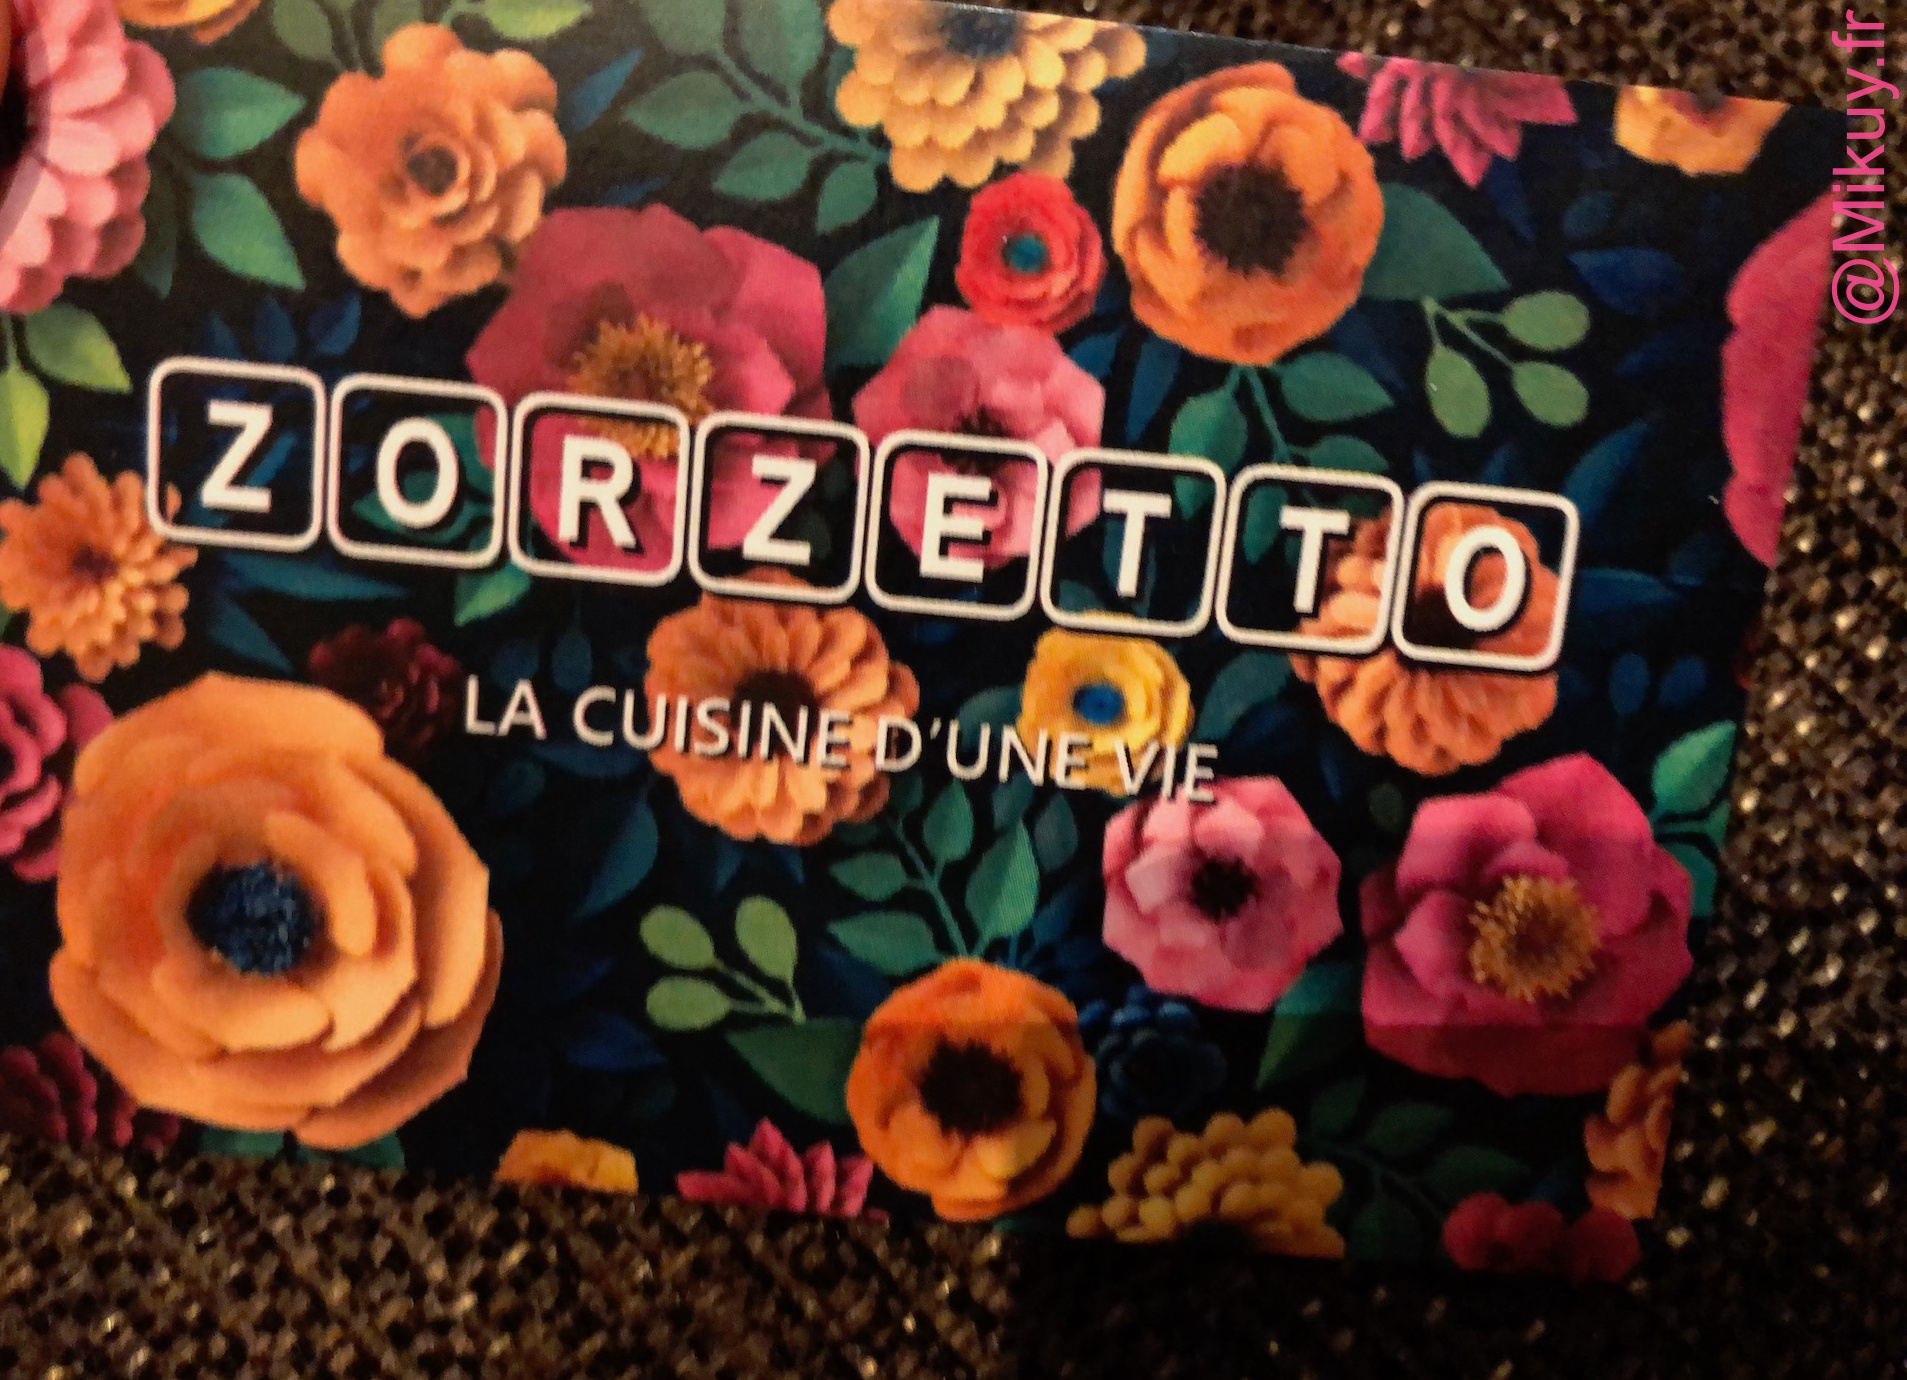 La carte fleurie de Zorzetto